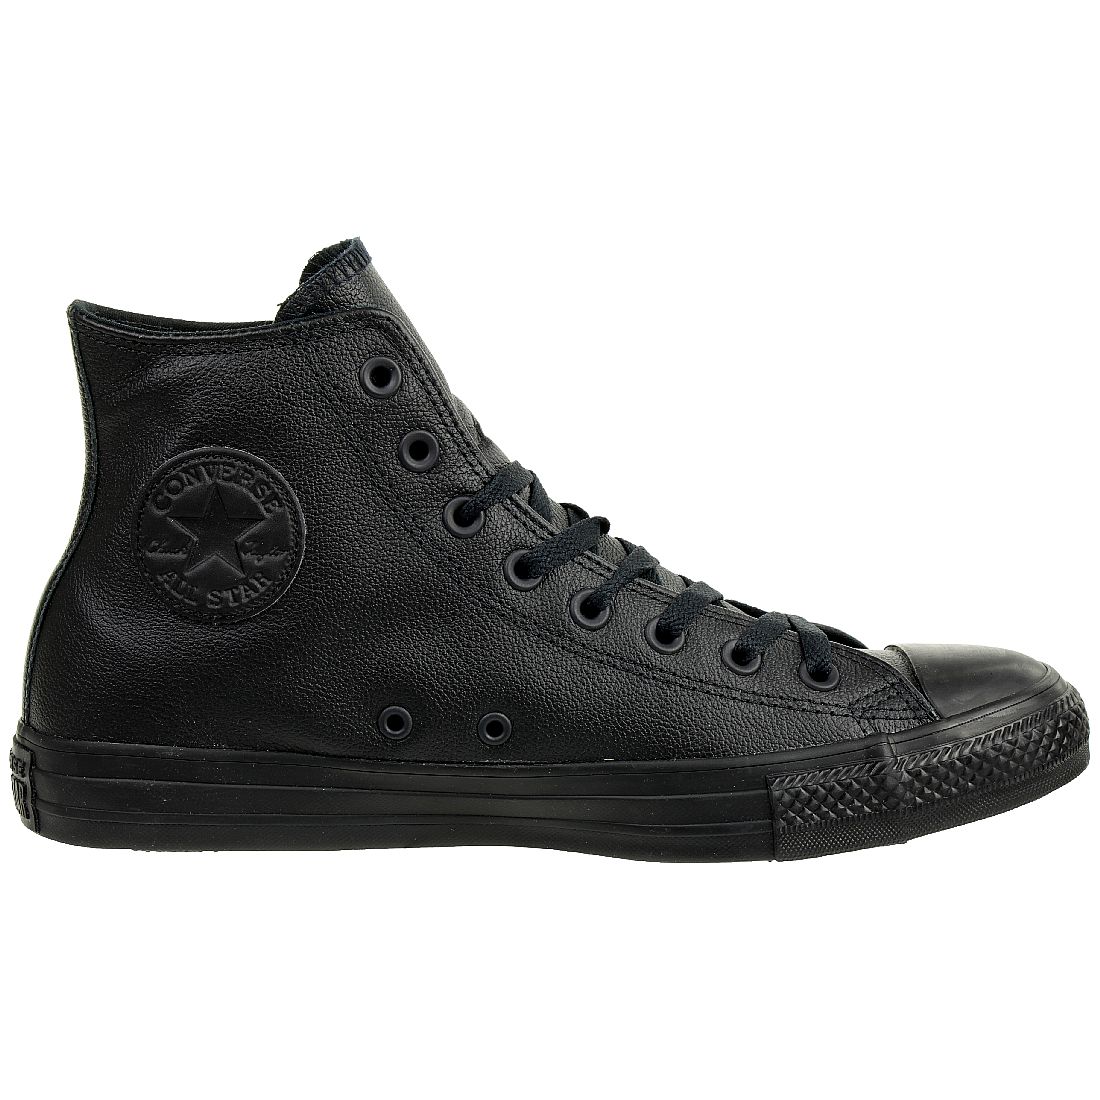 Converse C Taylor All Star HI Chuck Sneaker Leder mono schwarz 135251C